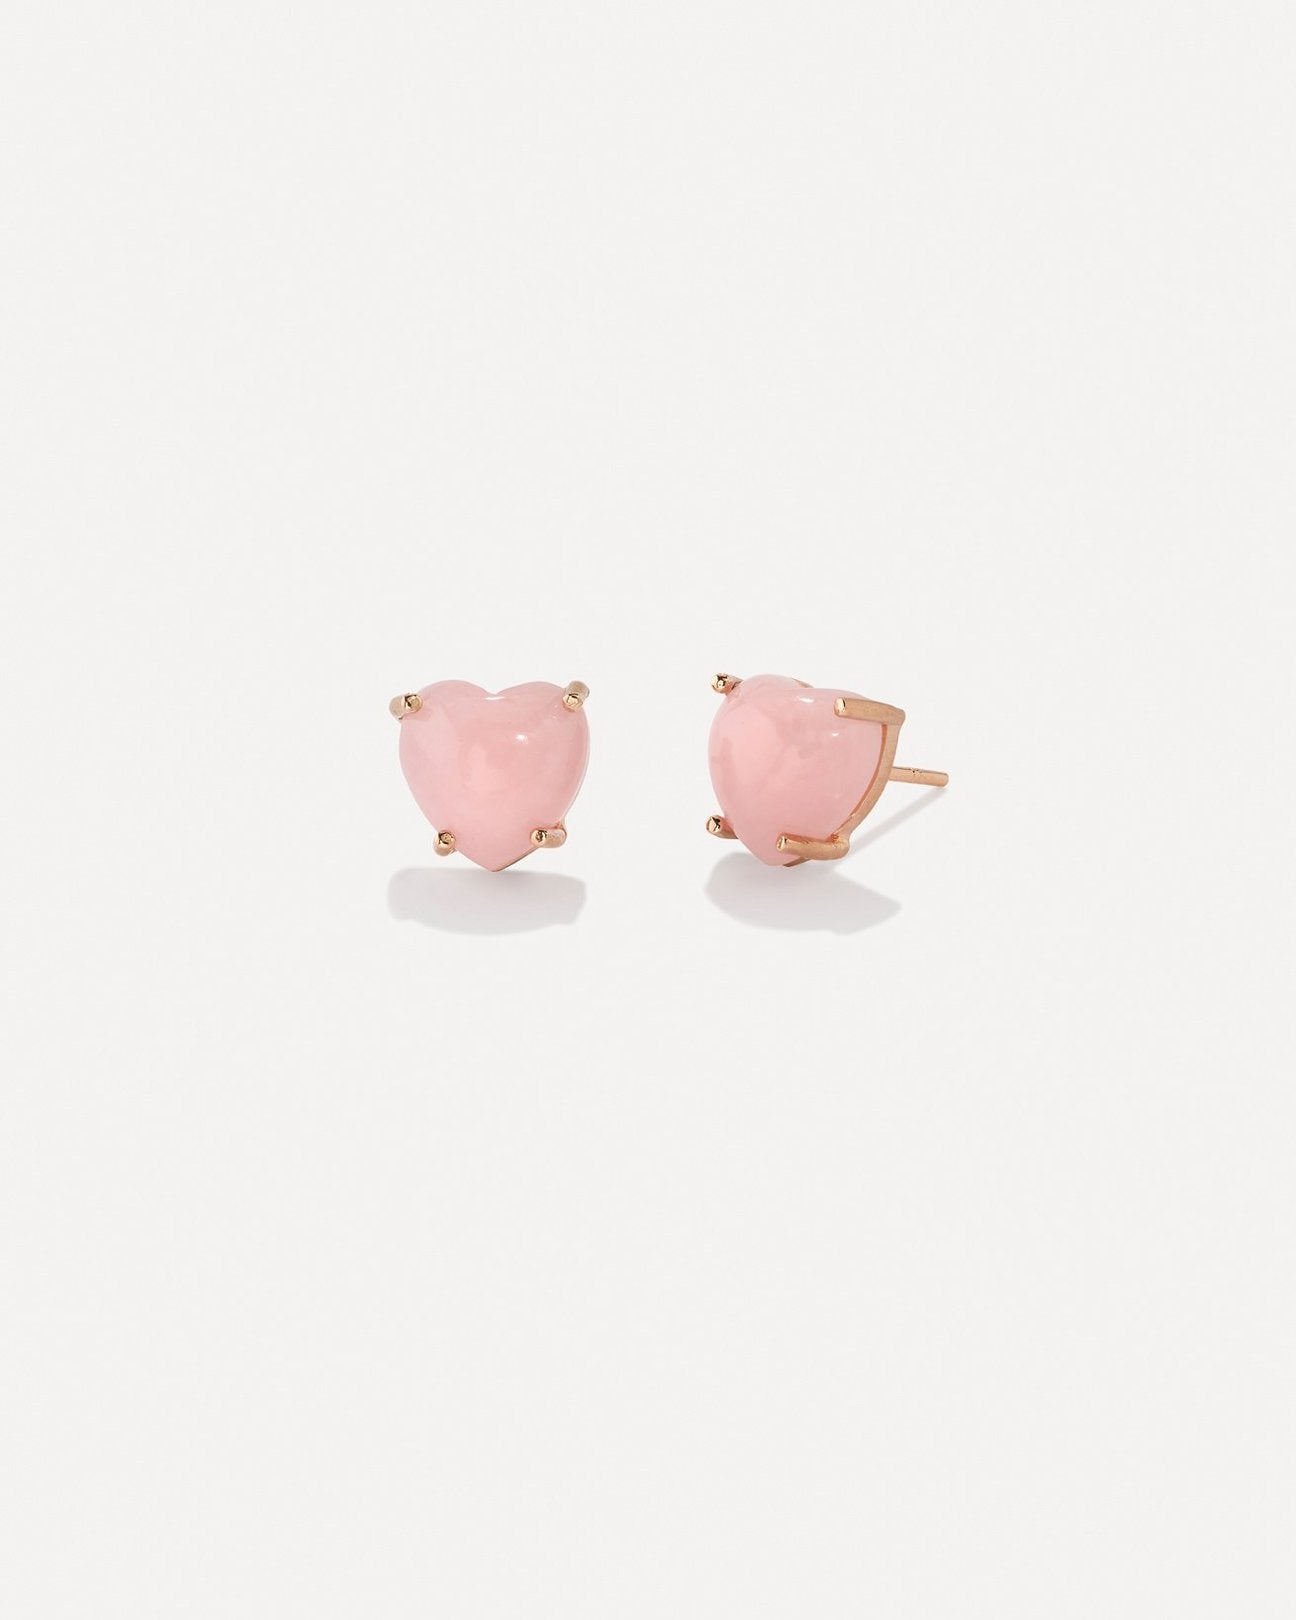 Love Studs in Rose Gold w/ Pink Opal-18k